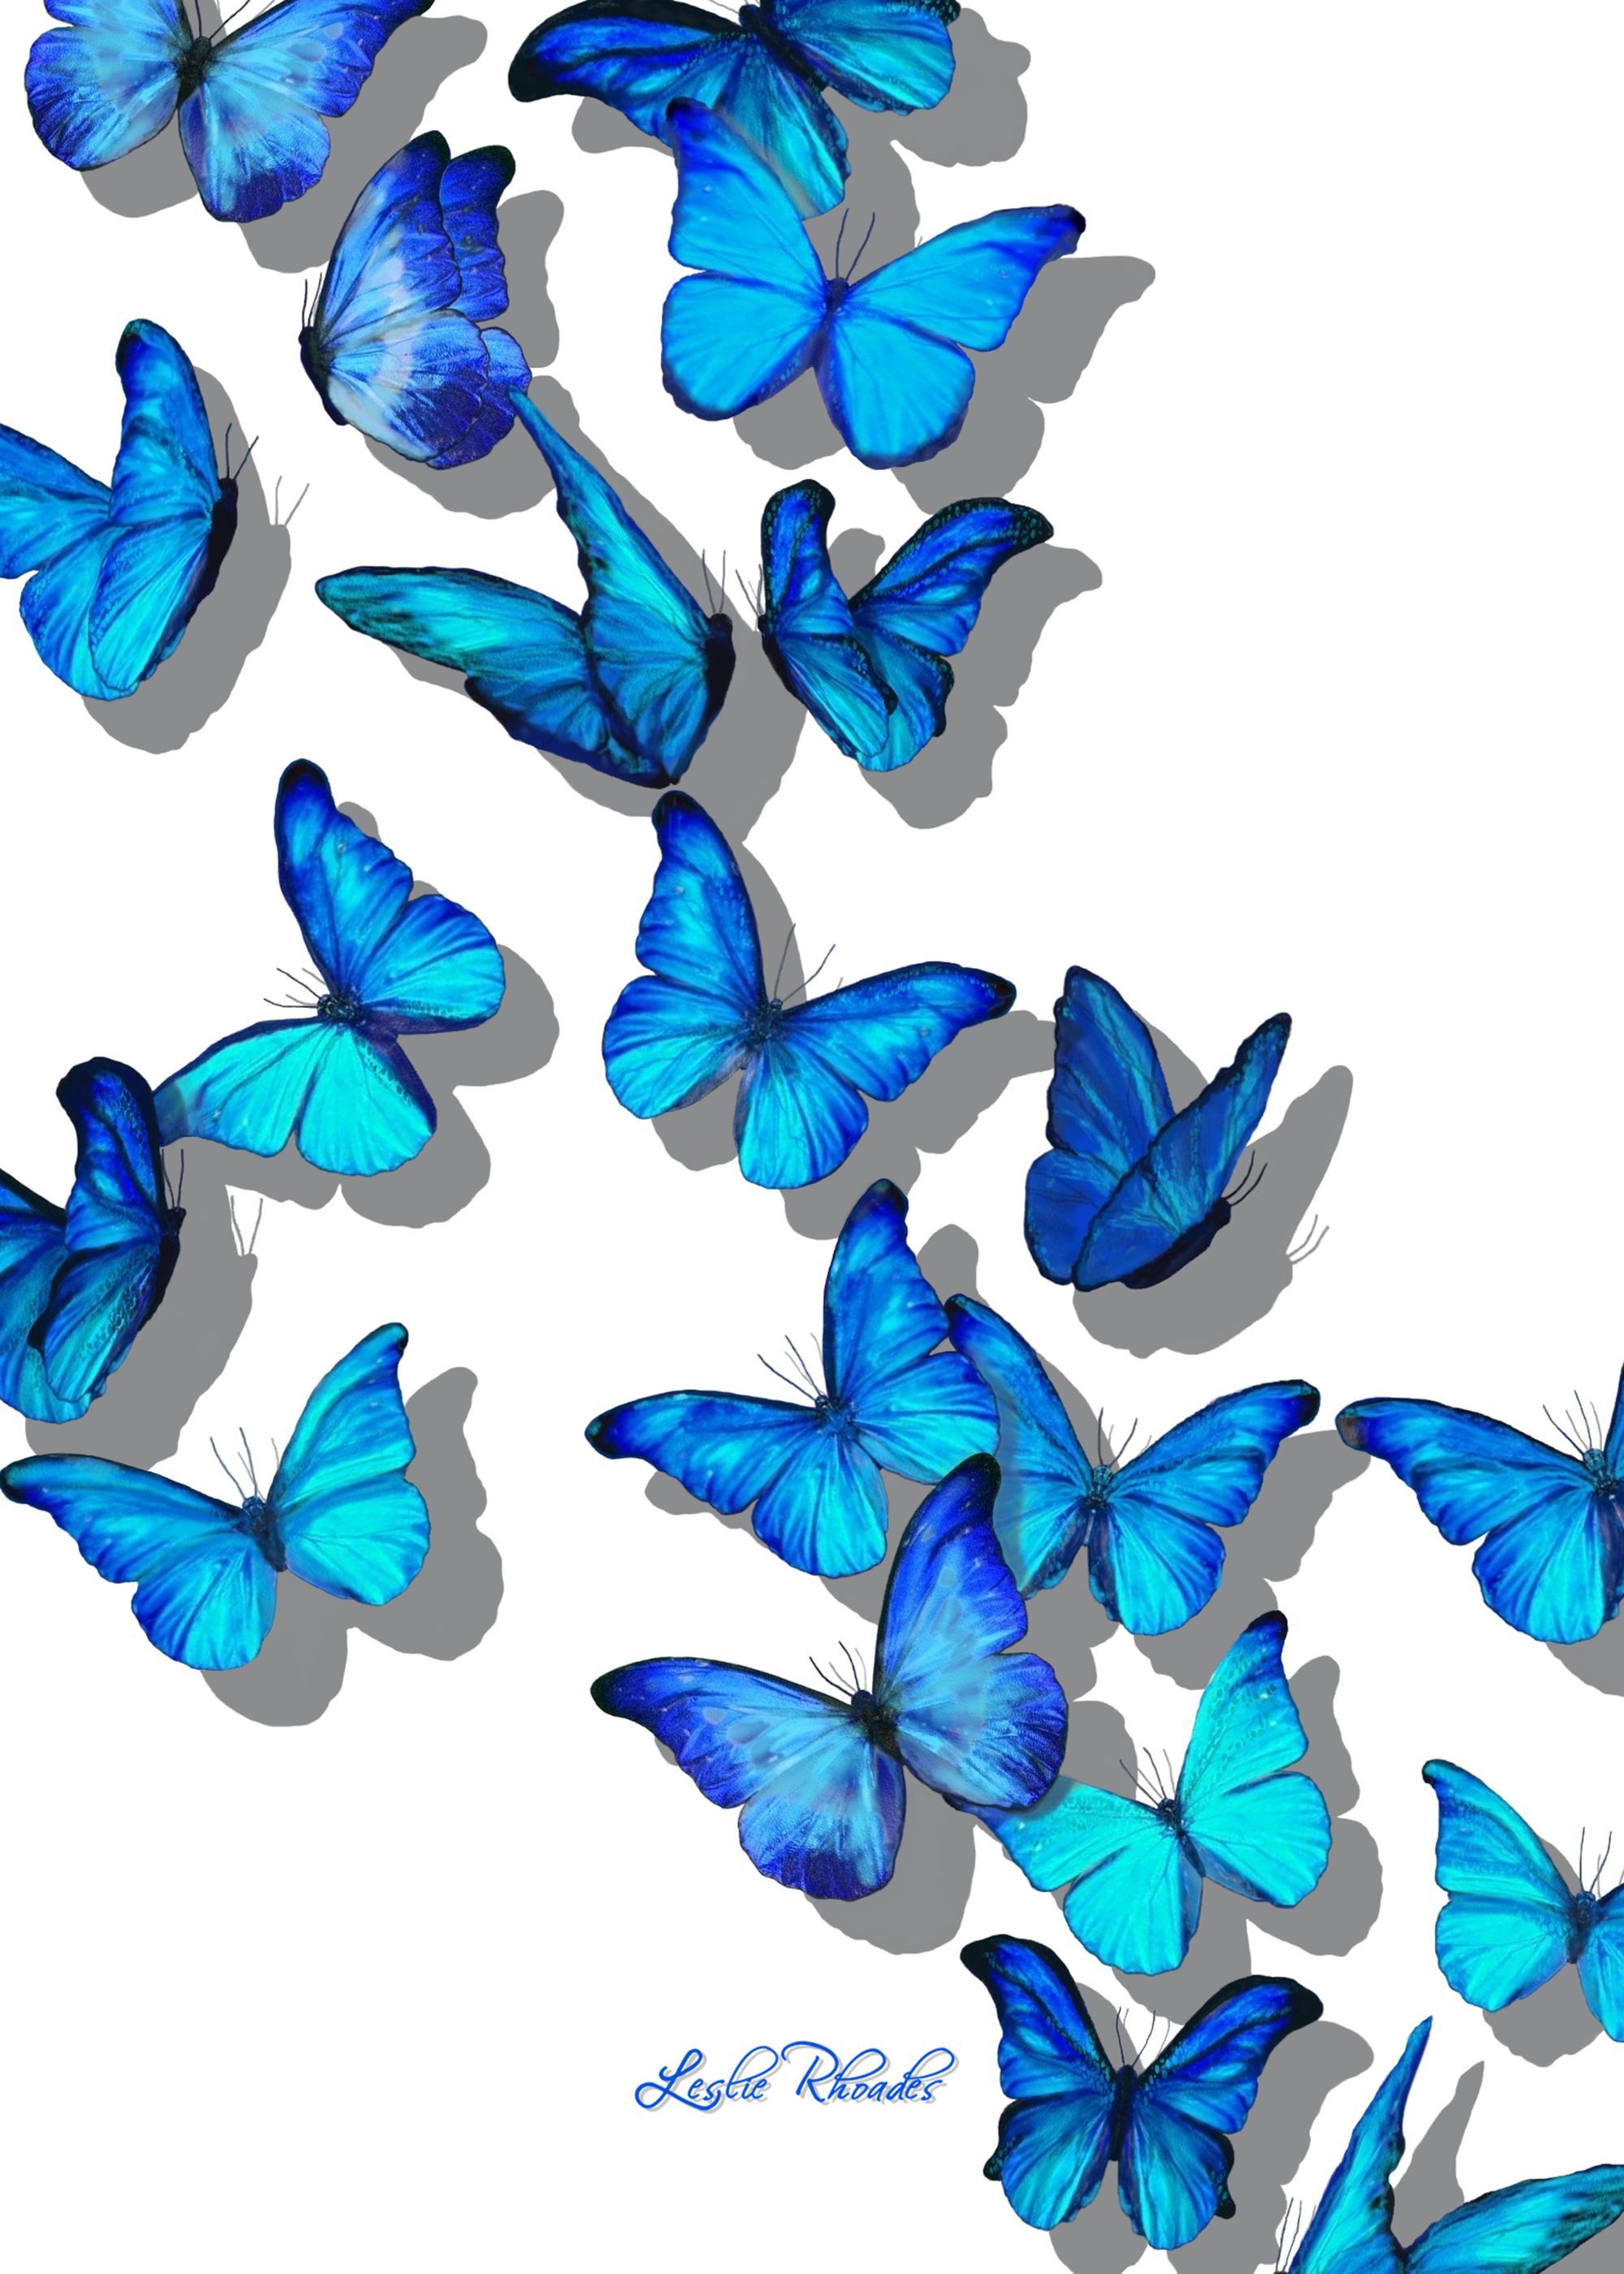 Butterfly Blanket digital artFine Art by Leslie Rhoades AKA MrsHappy If interested i. Blue butterfly wallpaper, Butterfly wallpaper, Butterfly wallpaper iphone